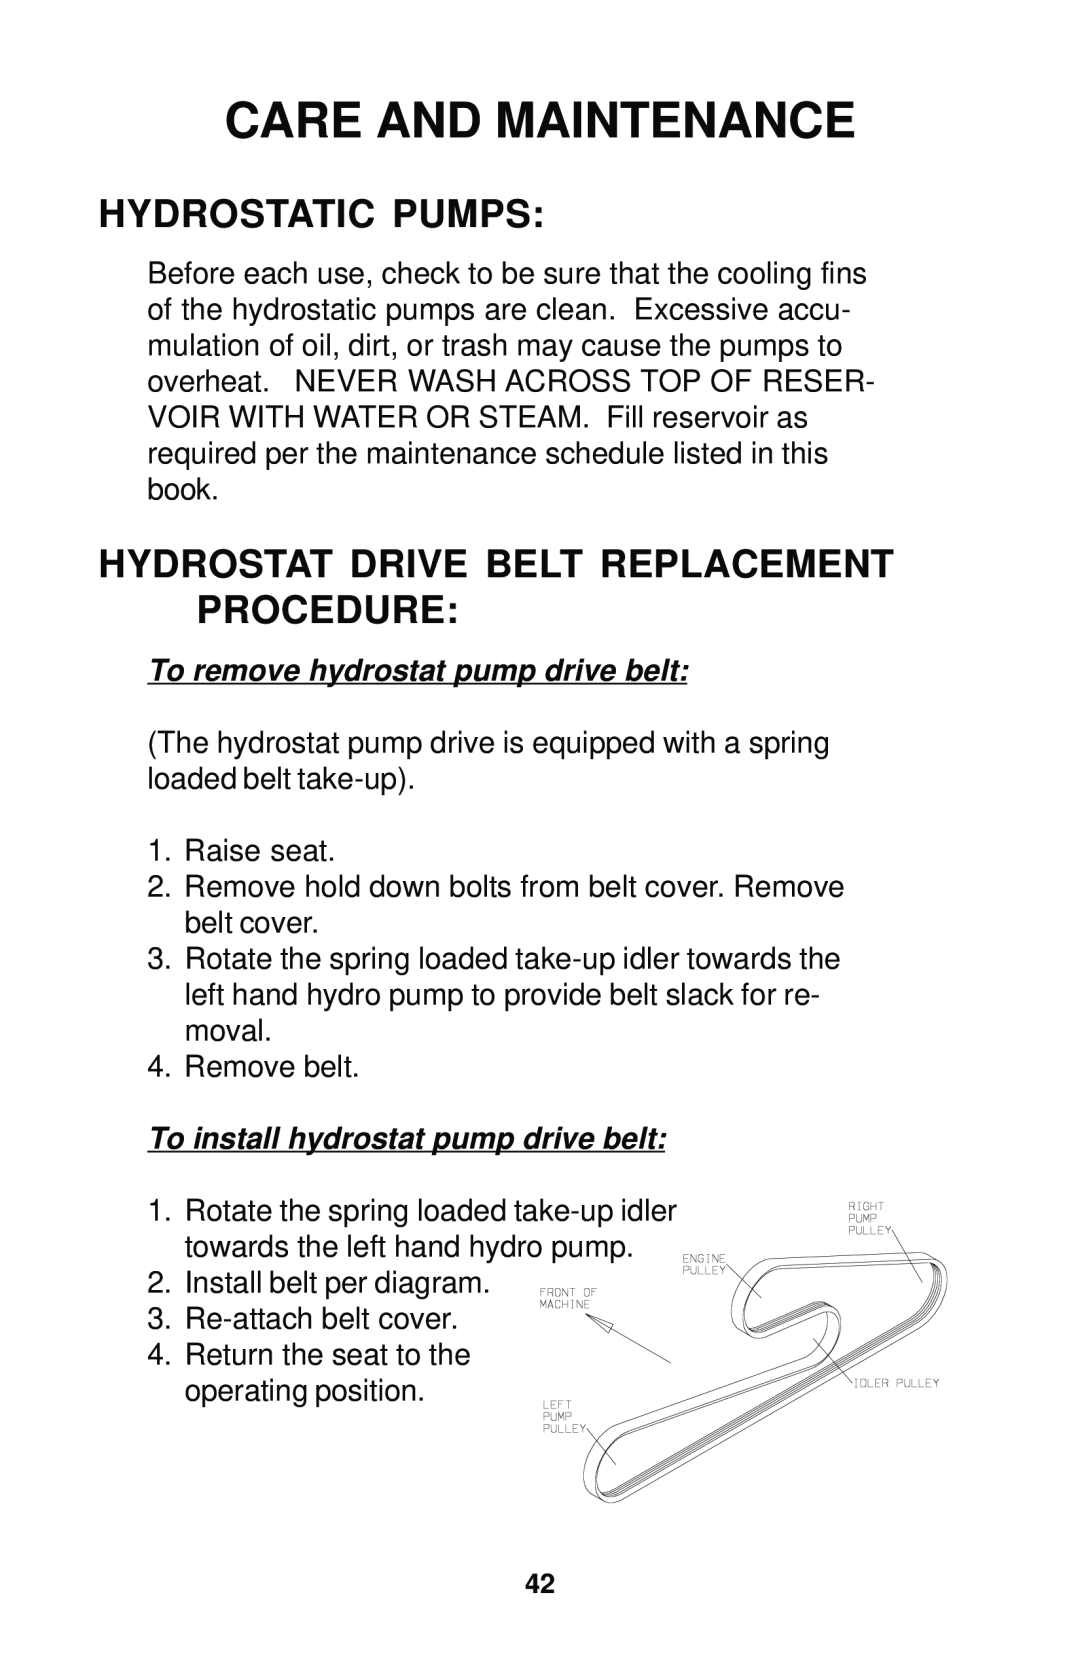 Dixon 12881-1104 manual Hydrostatic Pumps, Hydrostat Drive Belt Replacement Procedure, Care And Maintenance 